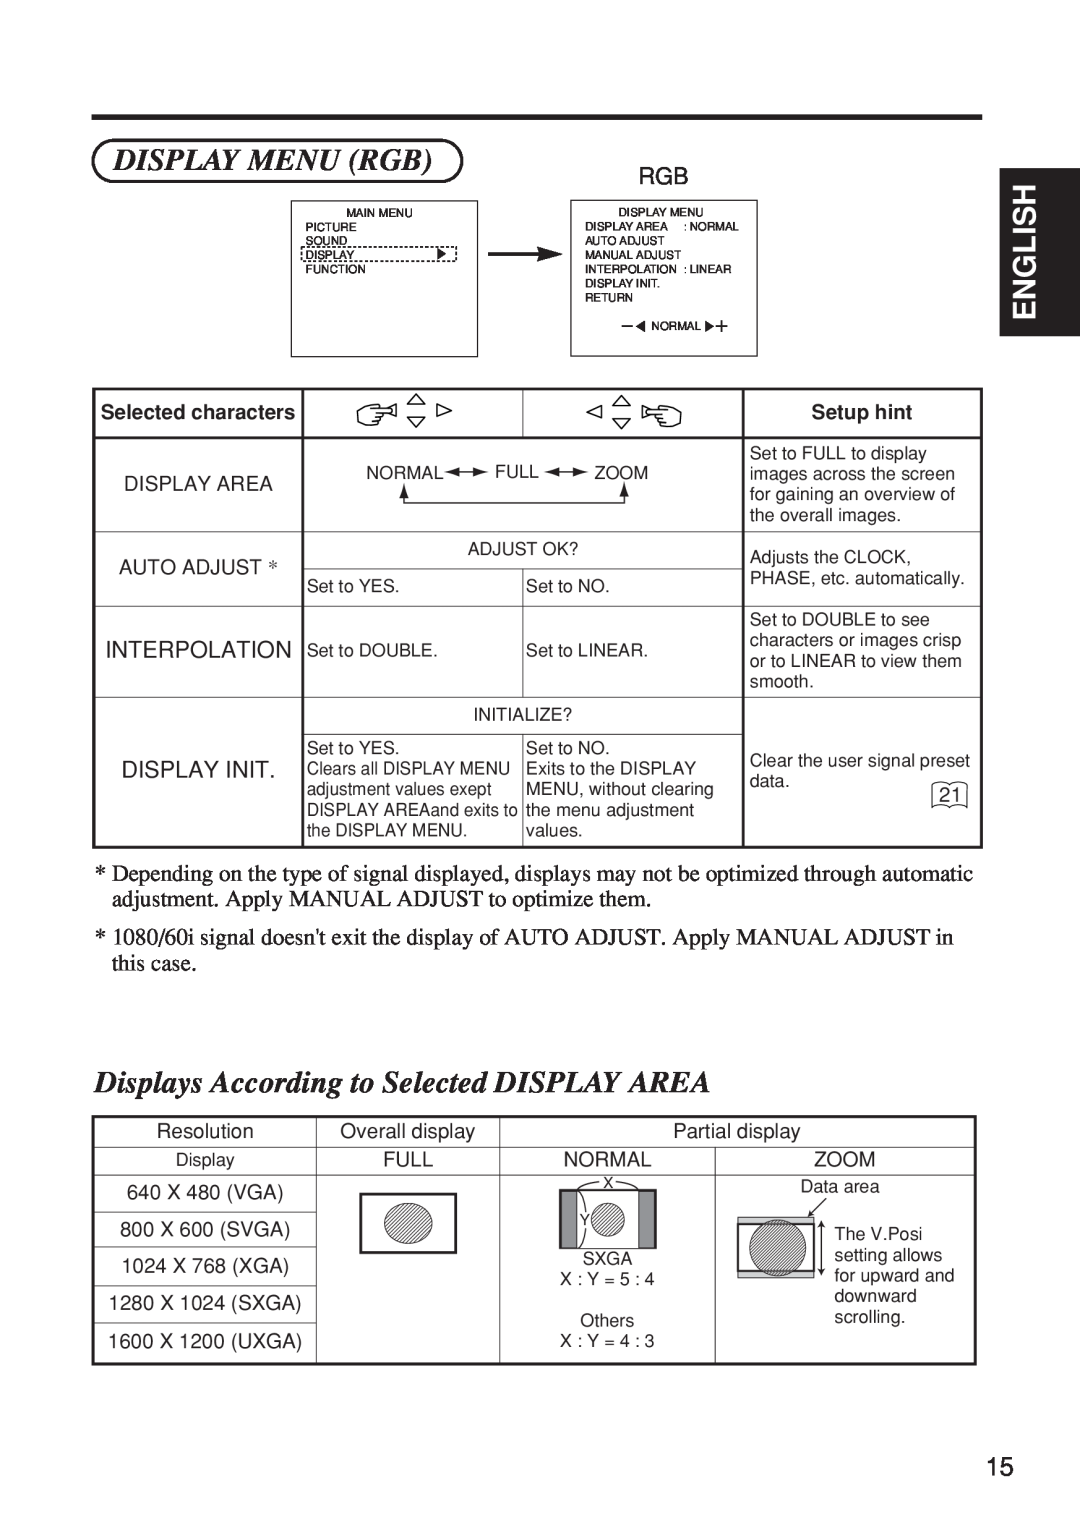 Hitachi Koki USA CMP4120HDUS Display Menu Rgb, Displays According to Selected DISPLAY AREA, English, Display Area, Full 